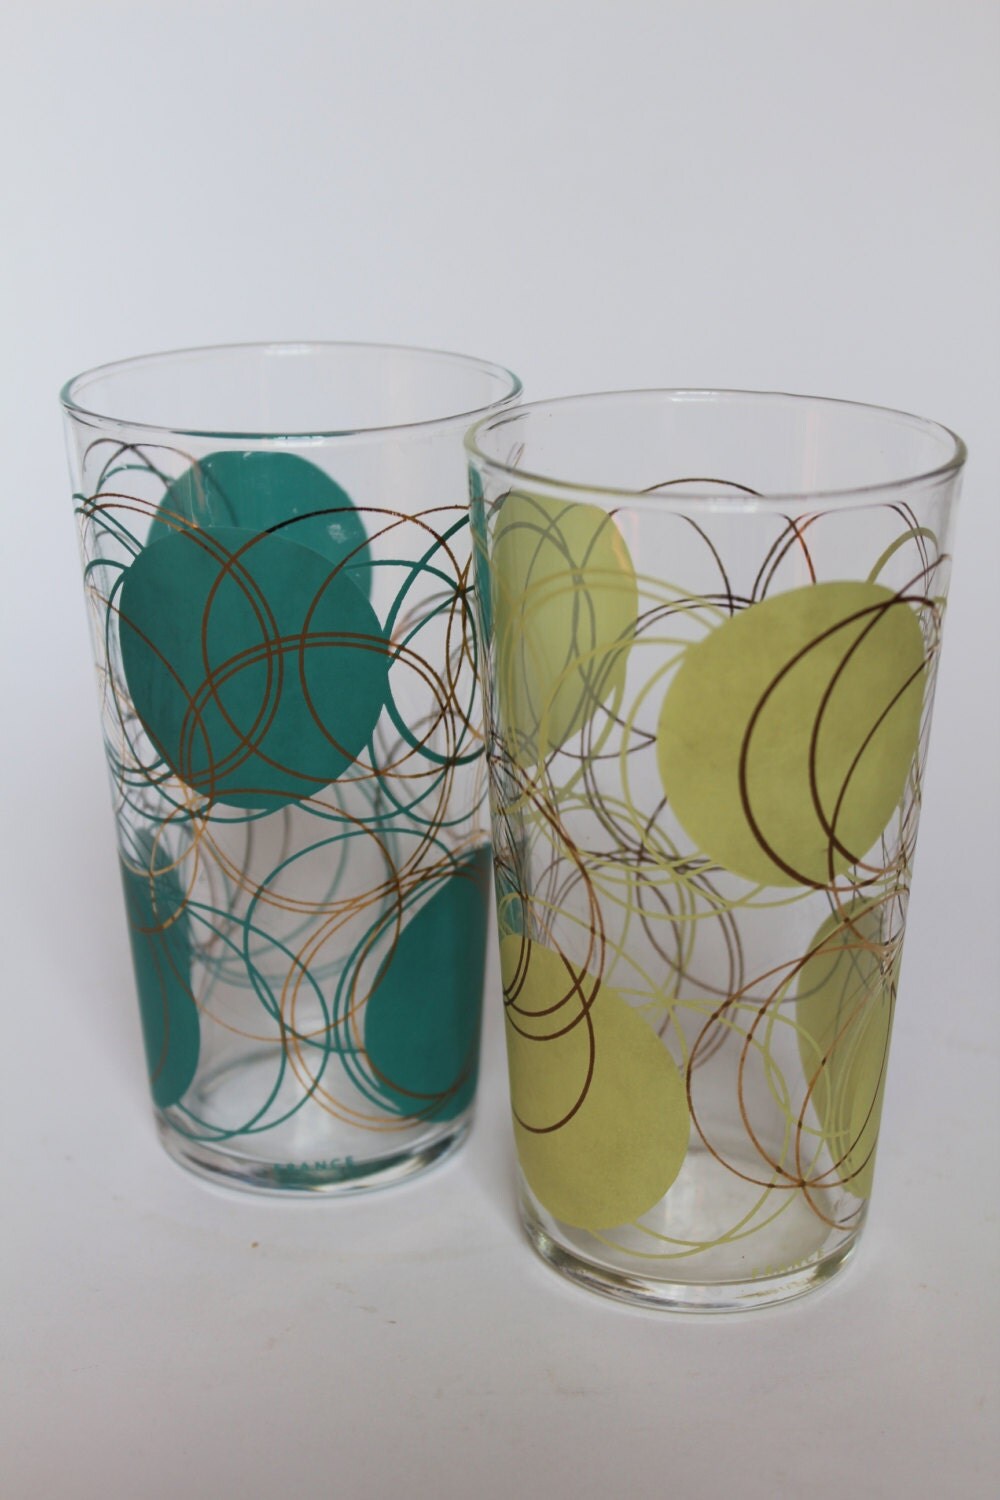 Pair Of Retro Drinking Glasses Atomic Swirl Pattern Teal